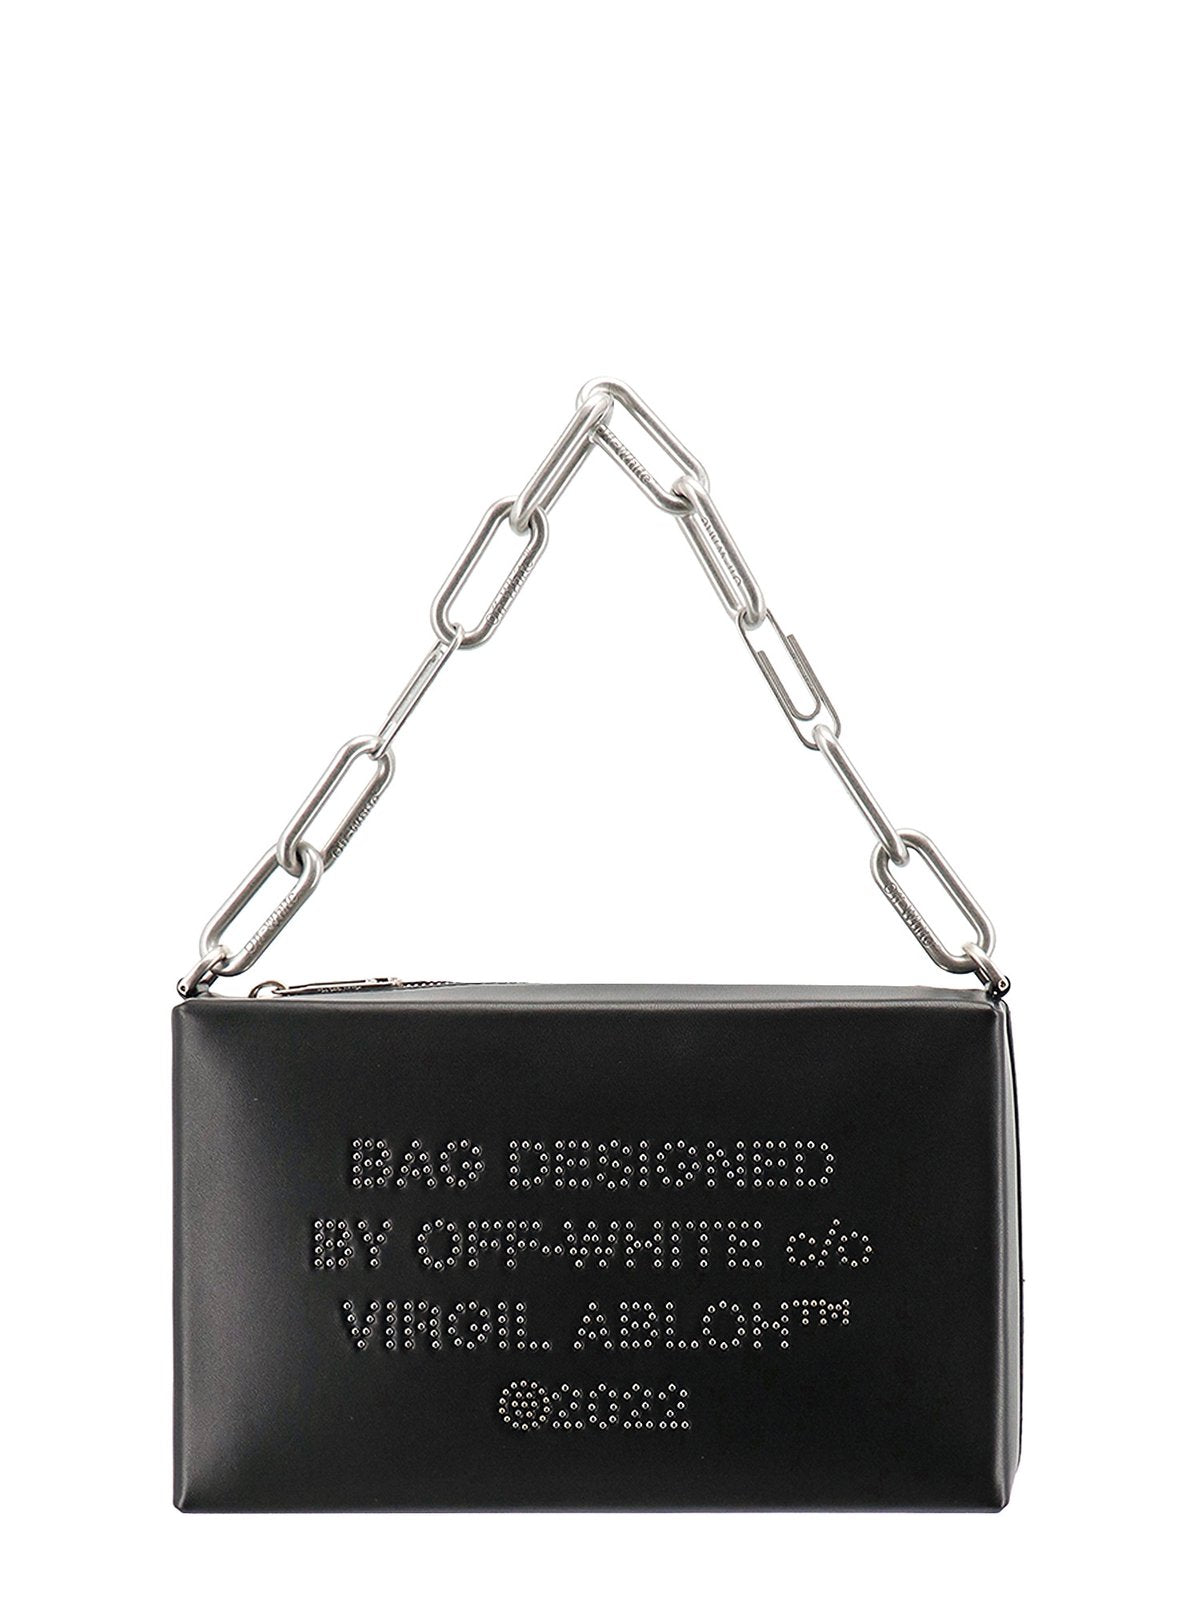 Off-White Logo Embellished Chain-Link Tote Bag